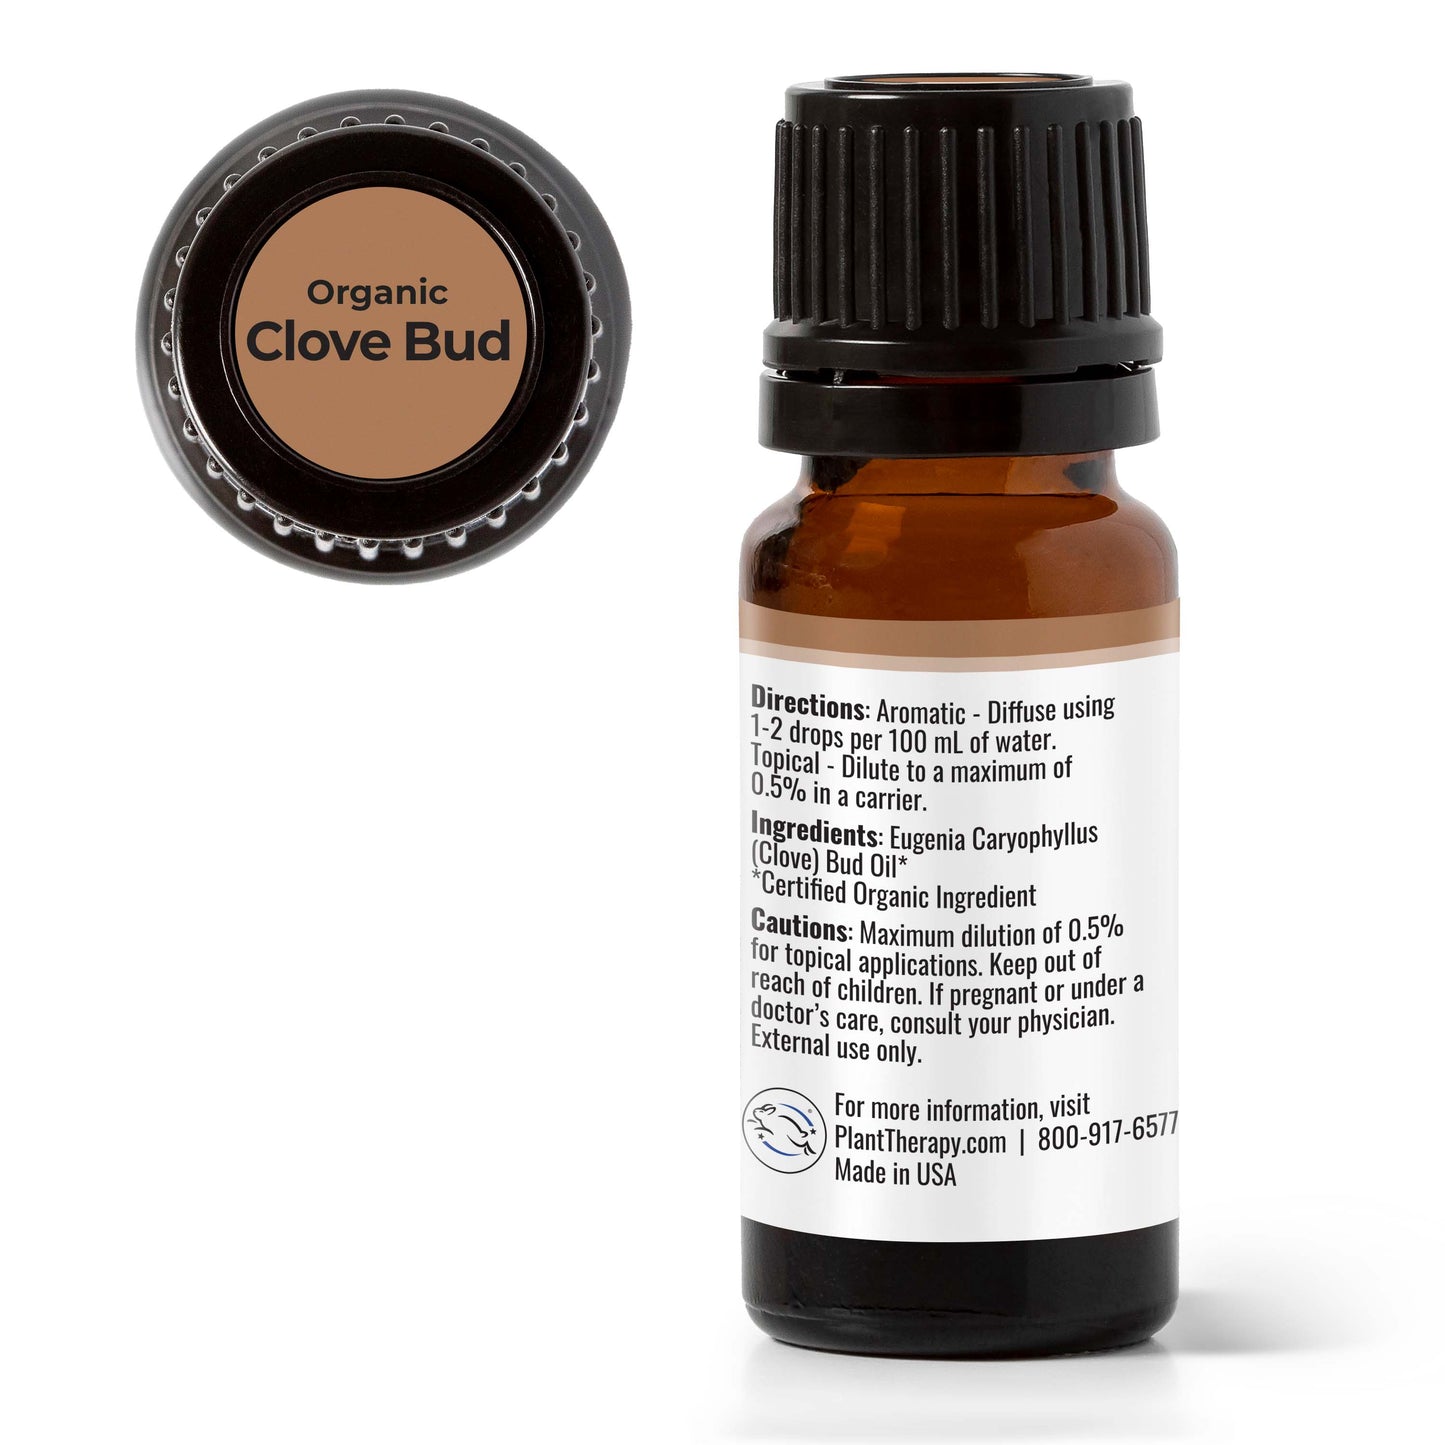 Organic Clove Bud Essential Oil back label